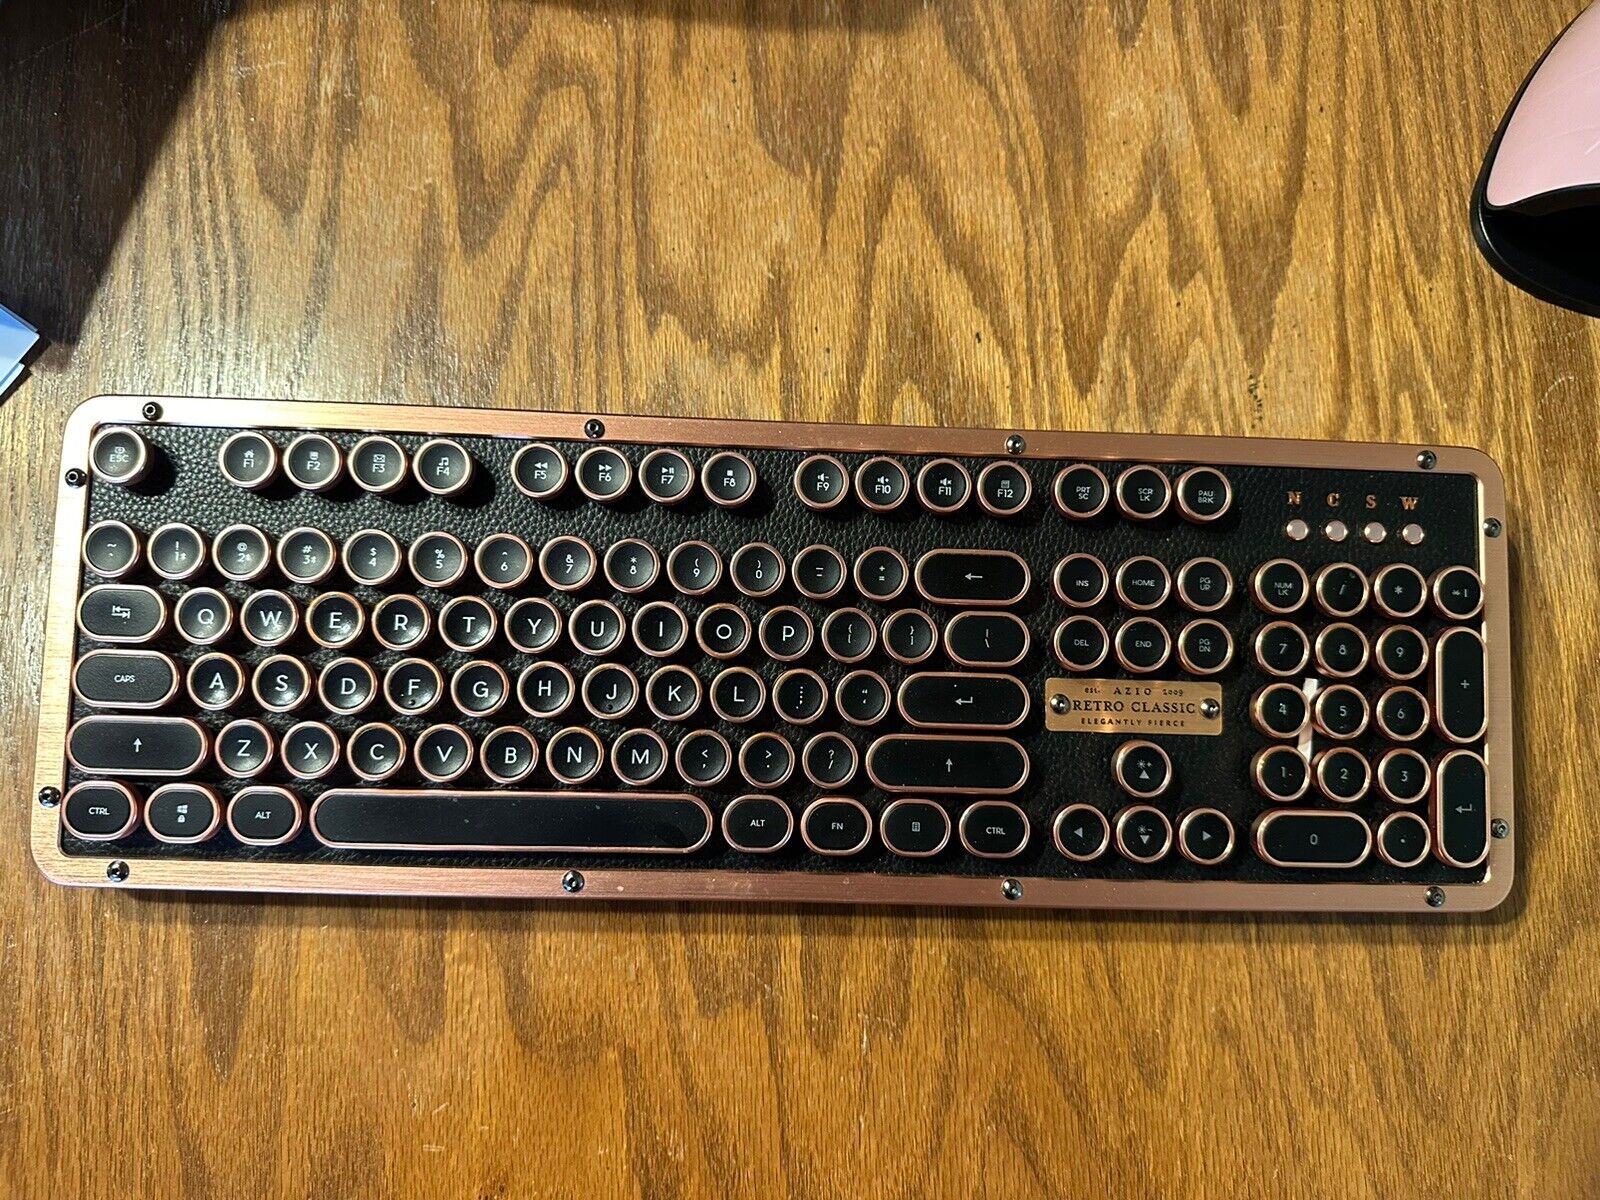 Azio Retro Classic USB Vintage Mechanical Keyboard